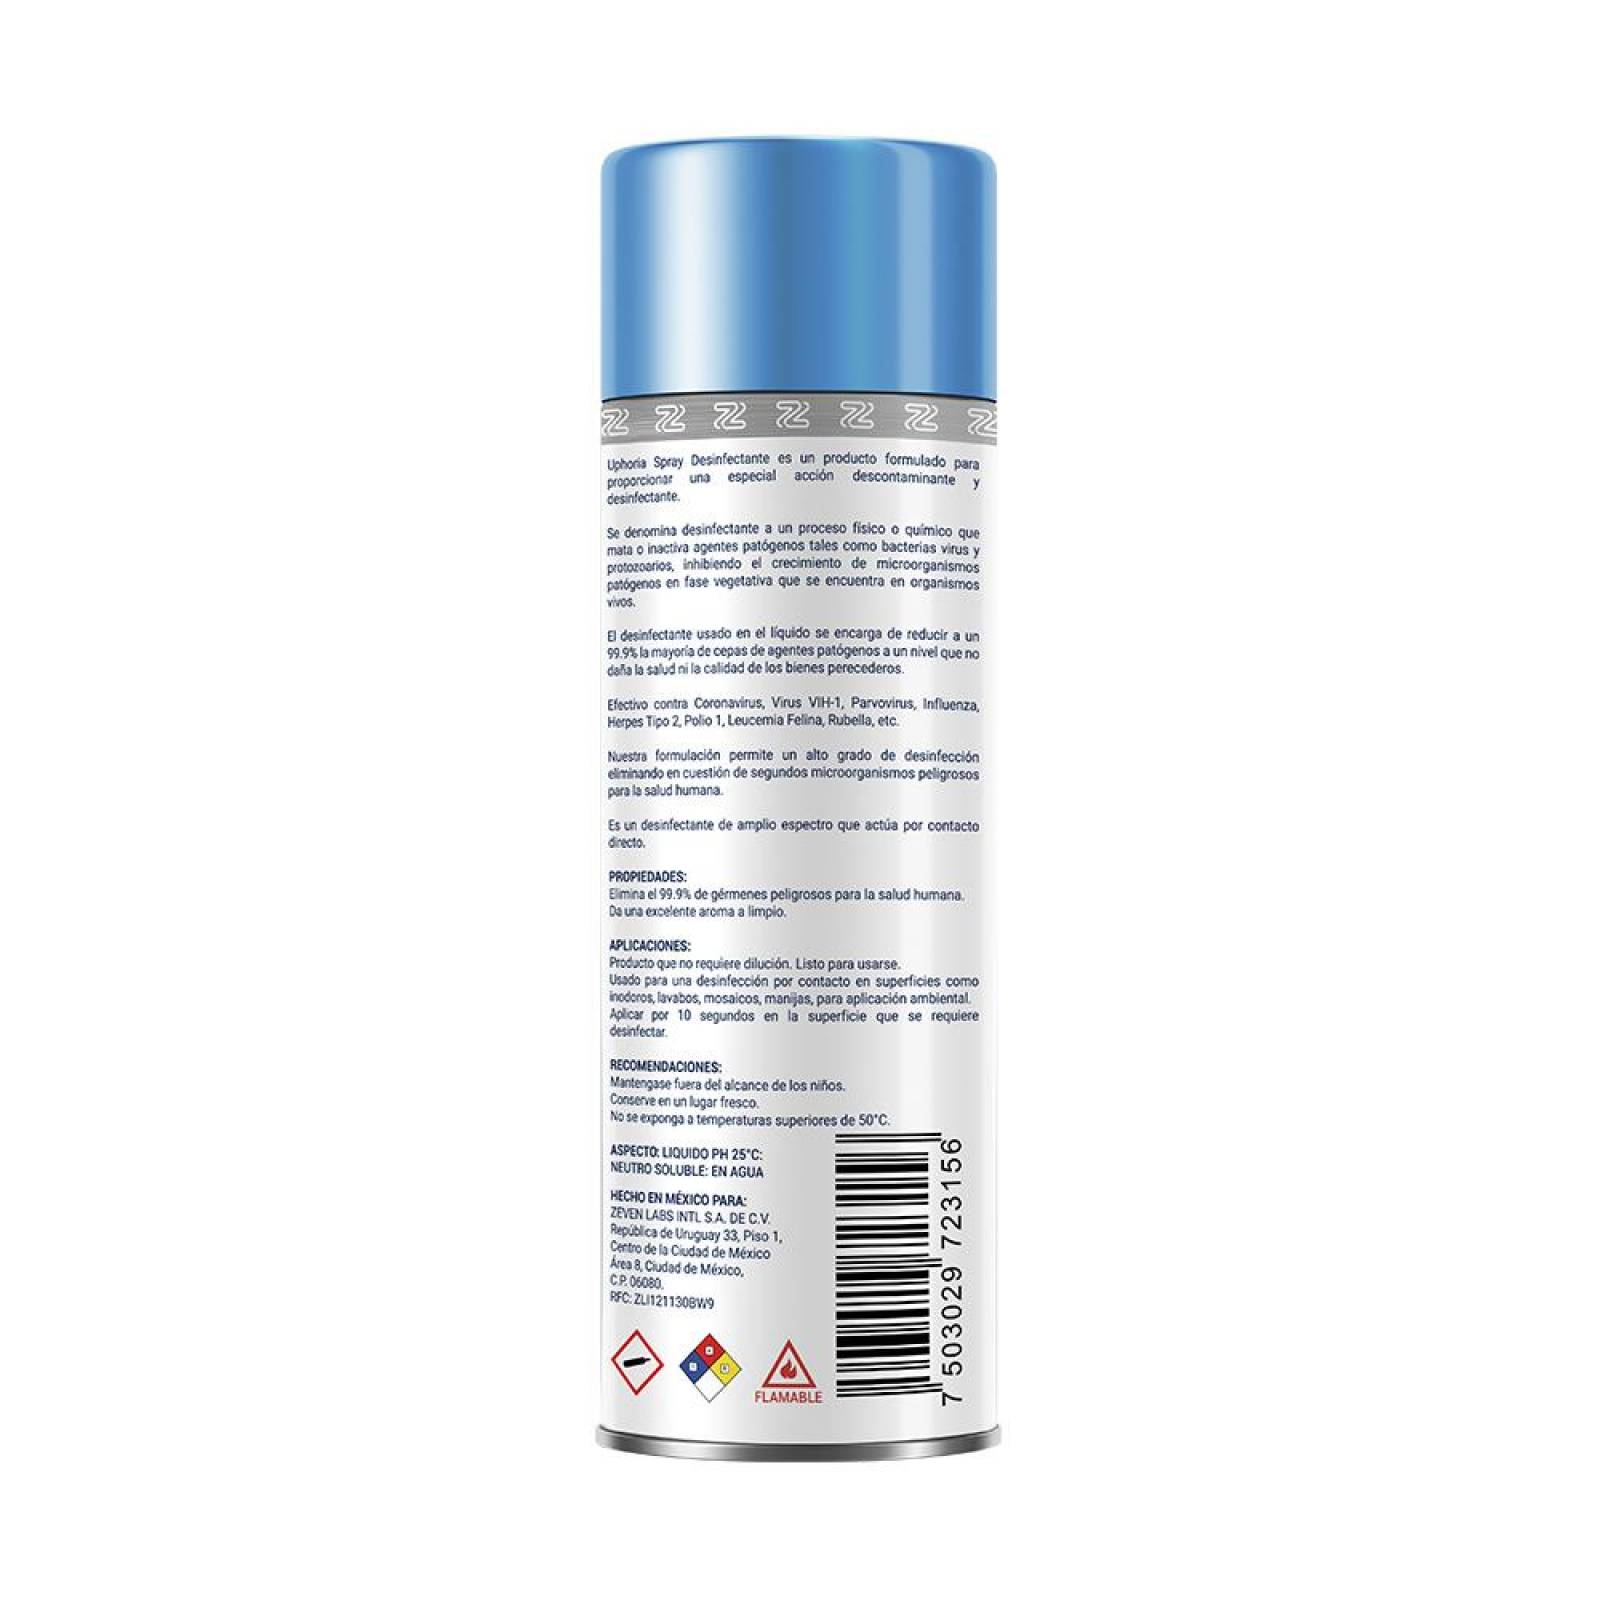 Spray Desinfectante Uphoria Elimina 99% Virus 24Pack - S008 